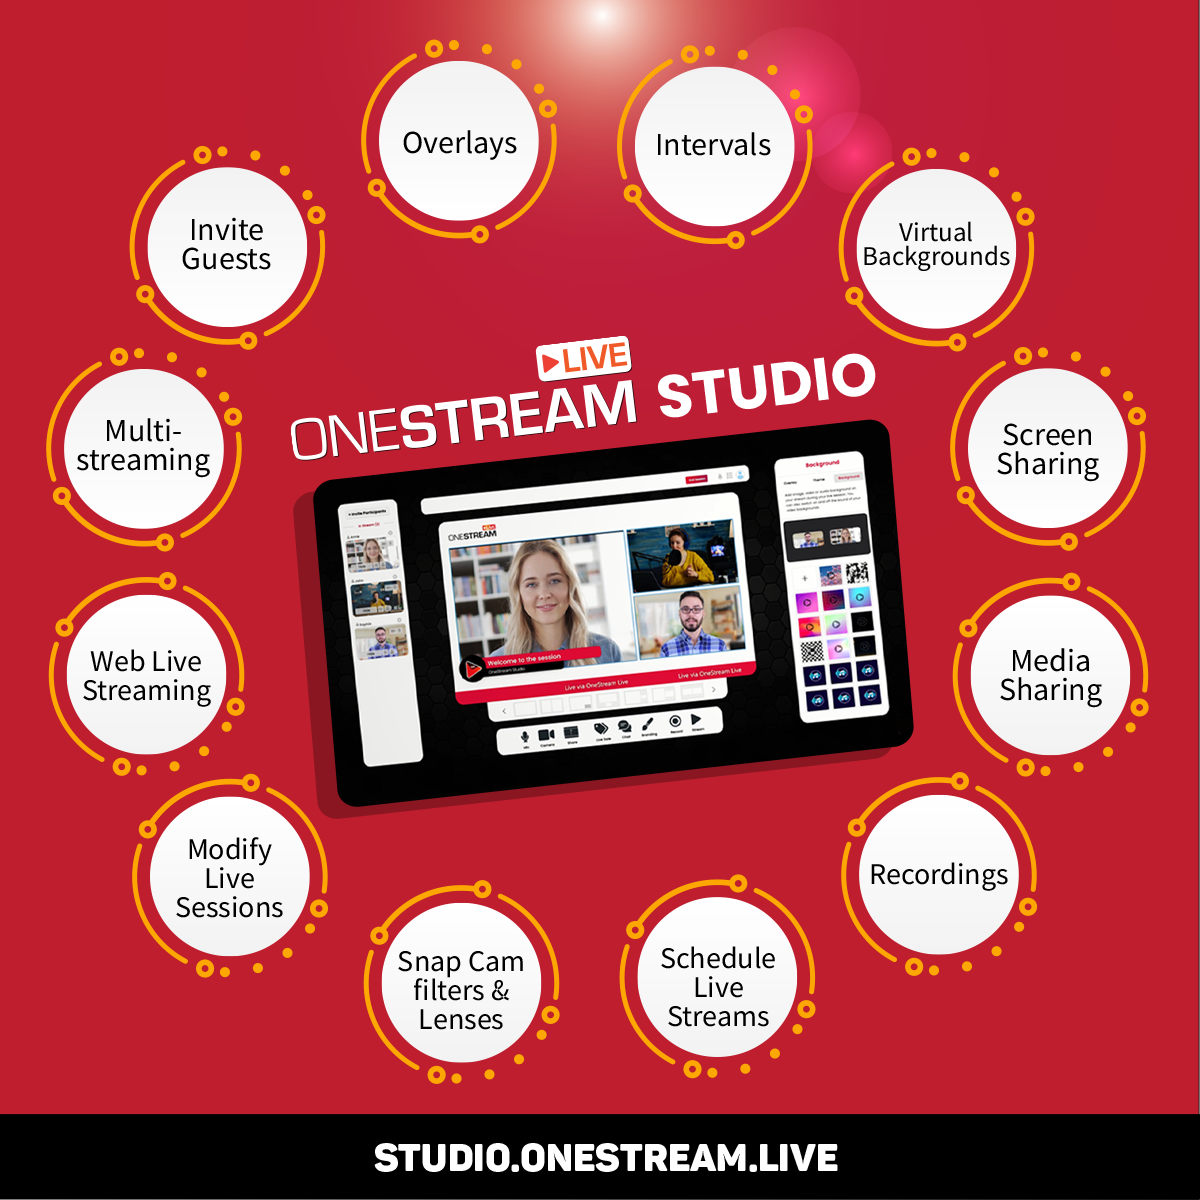 OneStream Studio features